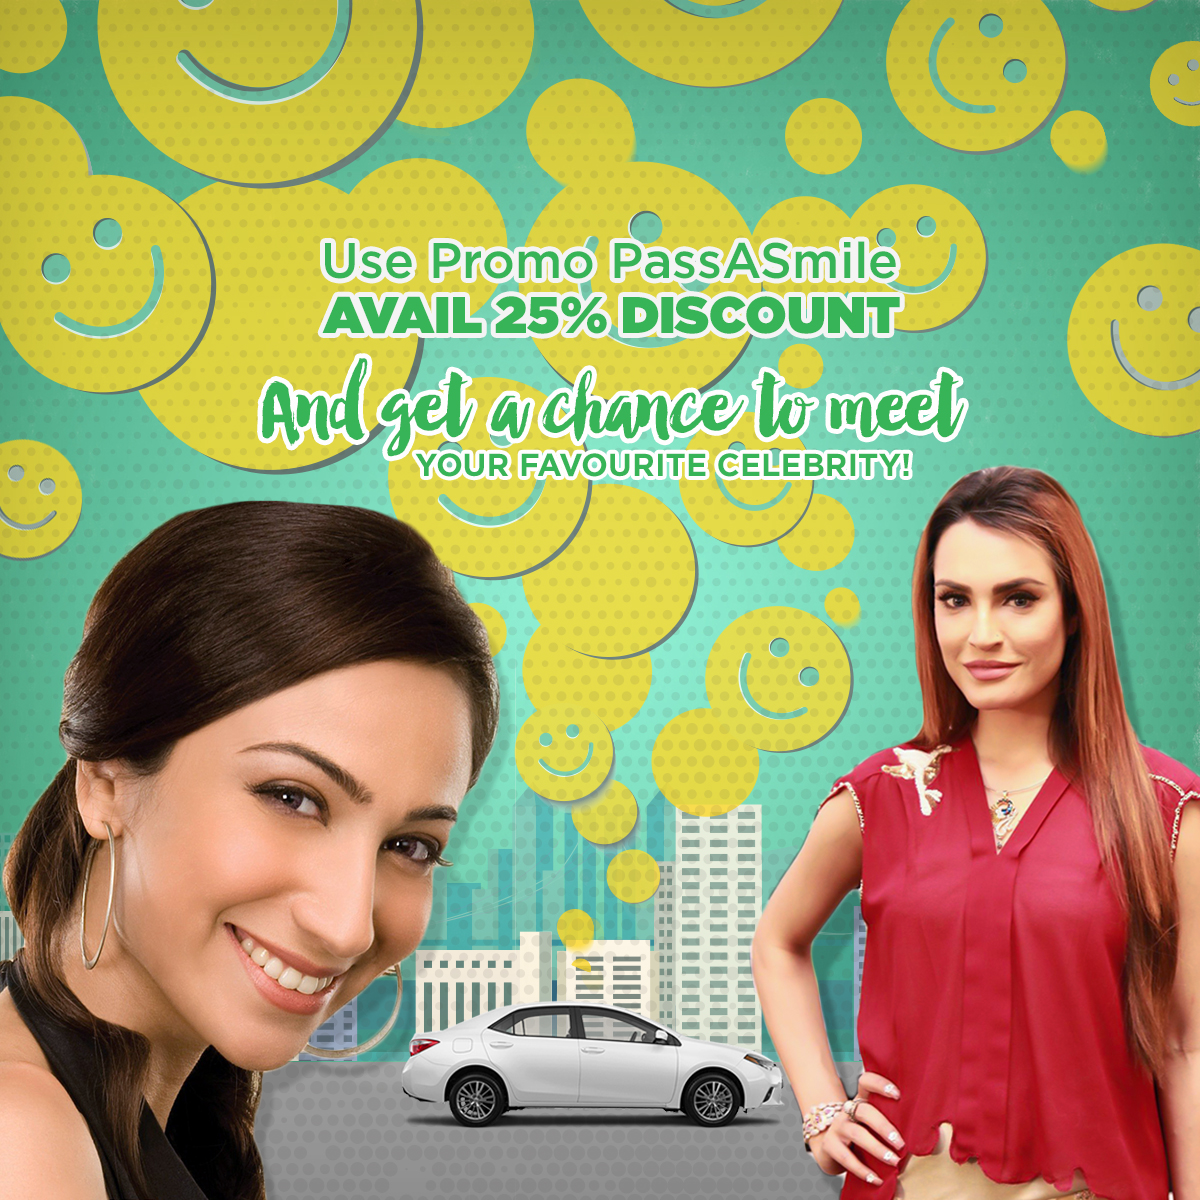 social media Advertising  artworks graphic design  Layout marketing   campaign application Careem ride facebook